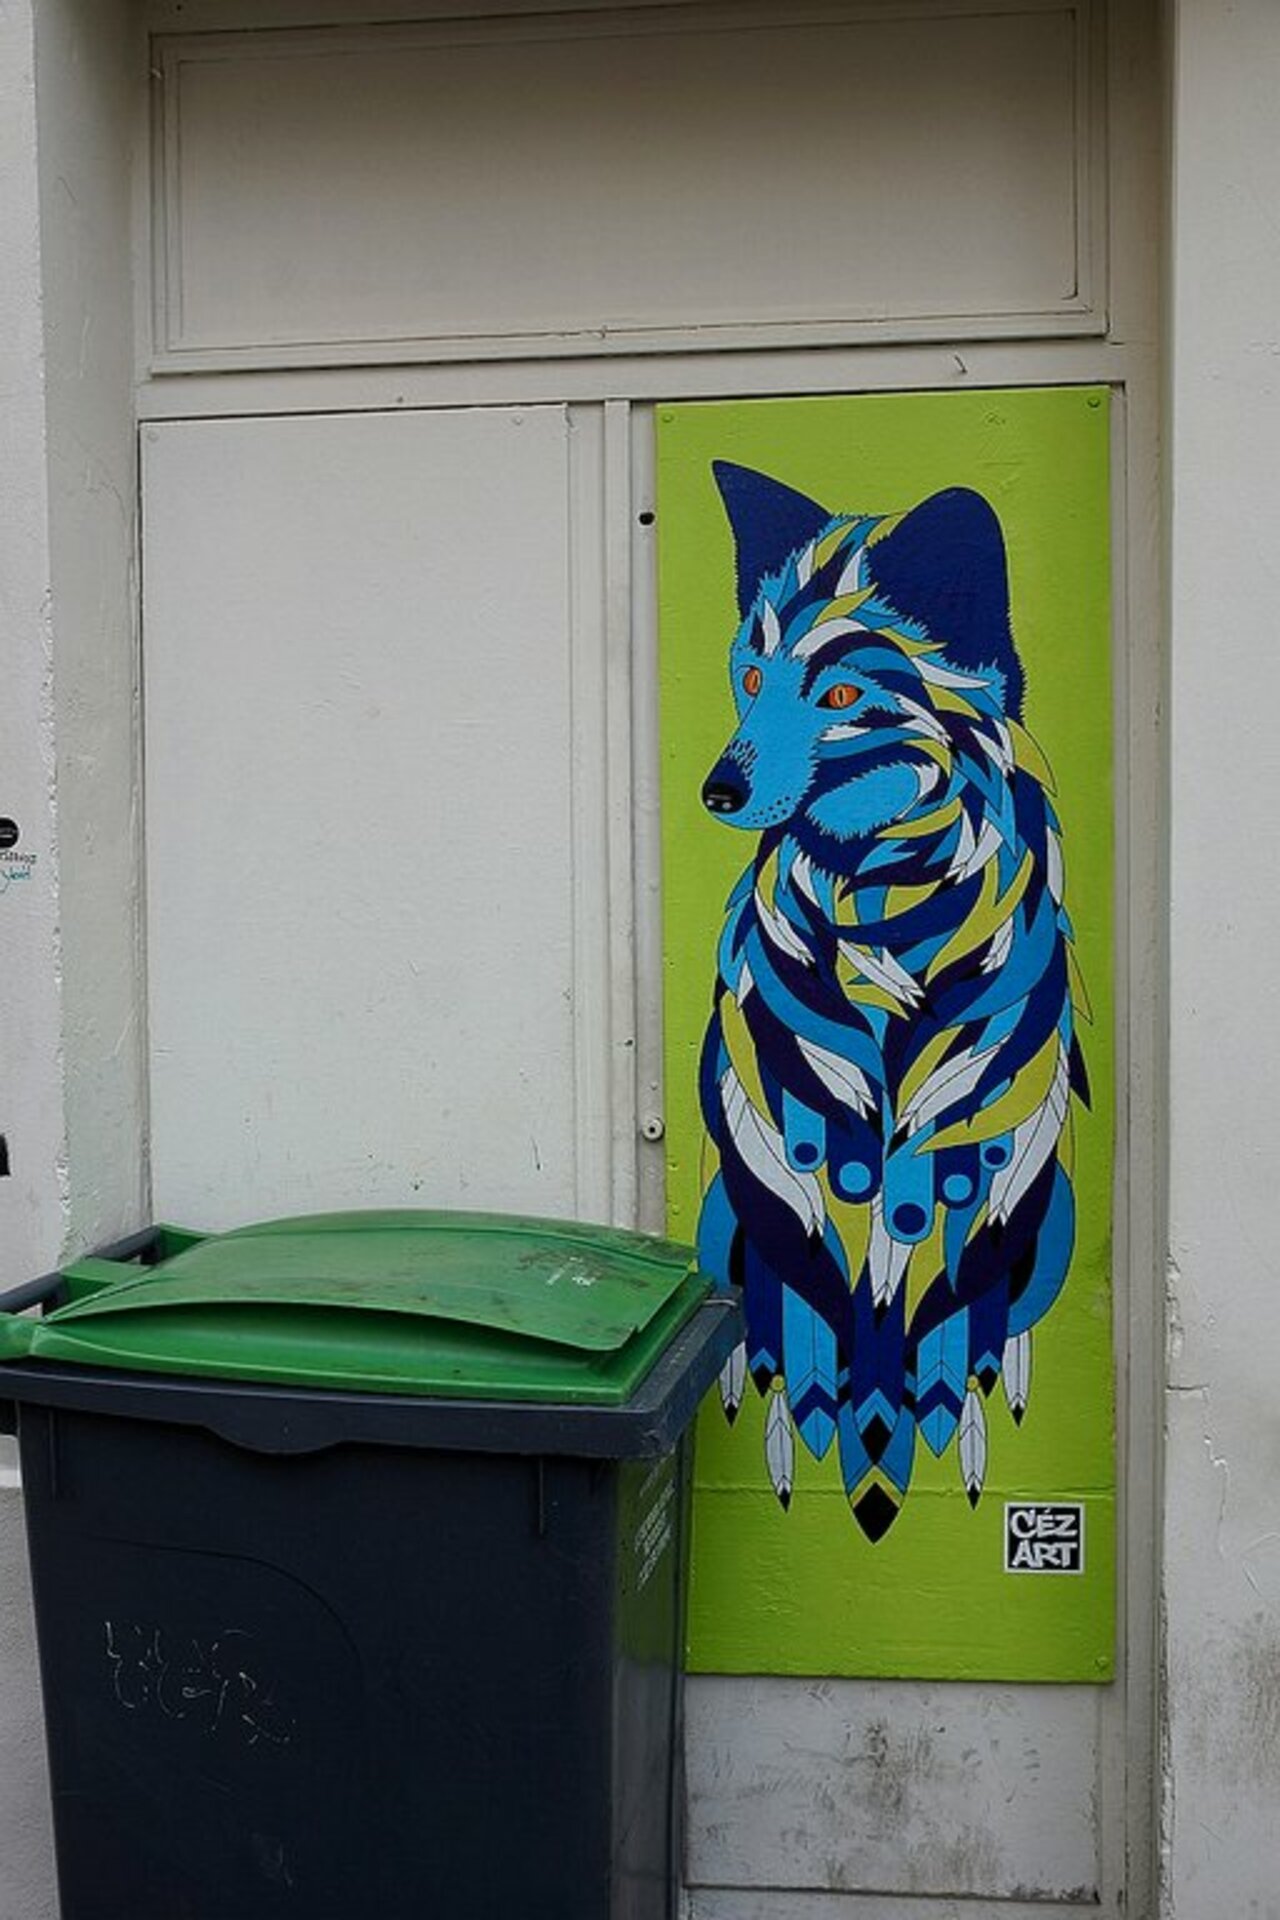 Street Art by anonymous in #Paris http://www.urbacolors.com #art #mural #graffiti #streetart https://t.co/6HjMX2PHLn